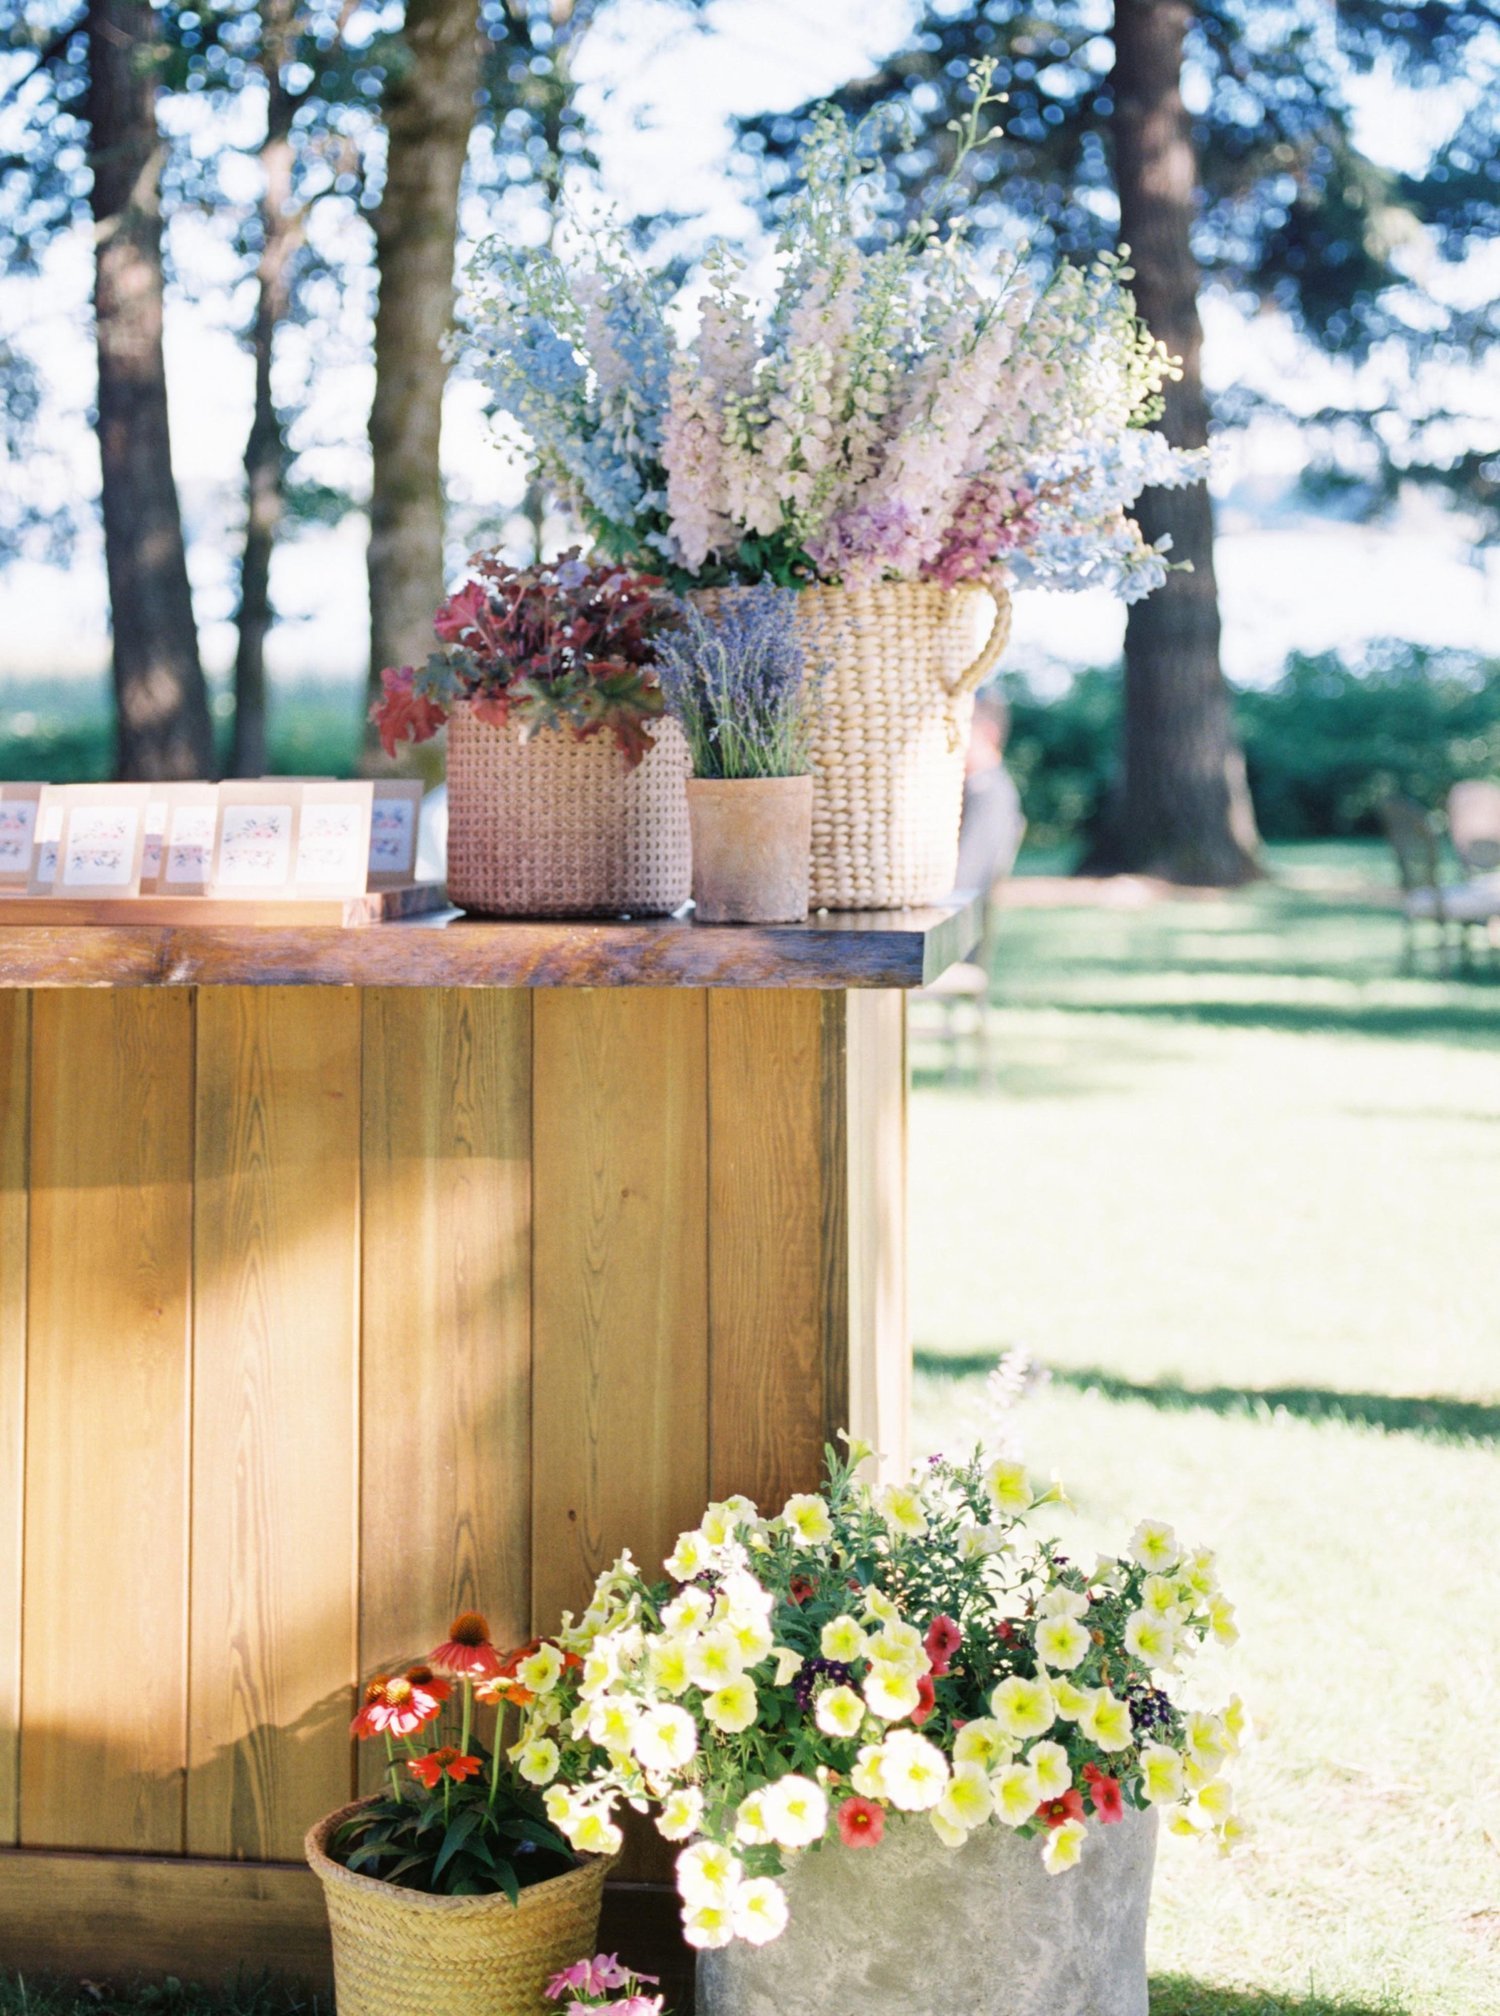 charming-floral-arrangements-outdoor-wedding-venue.jpg